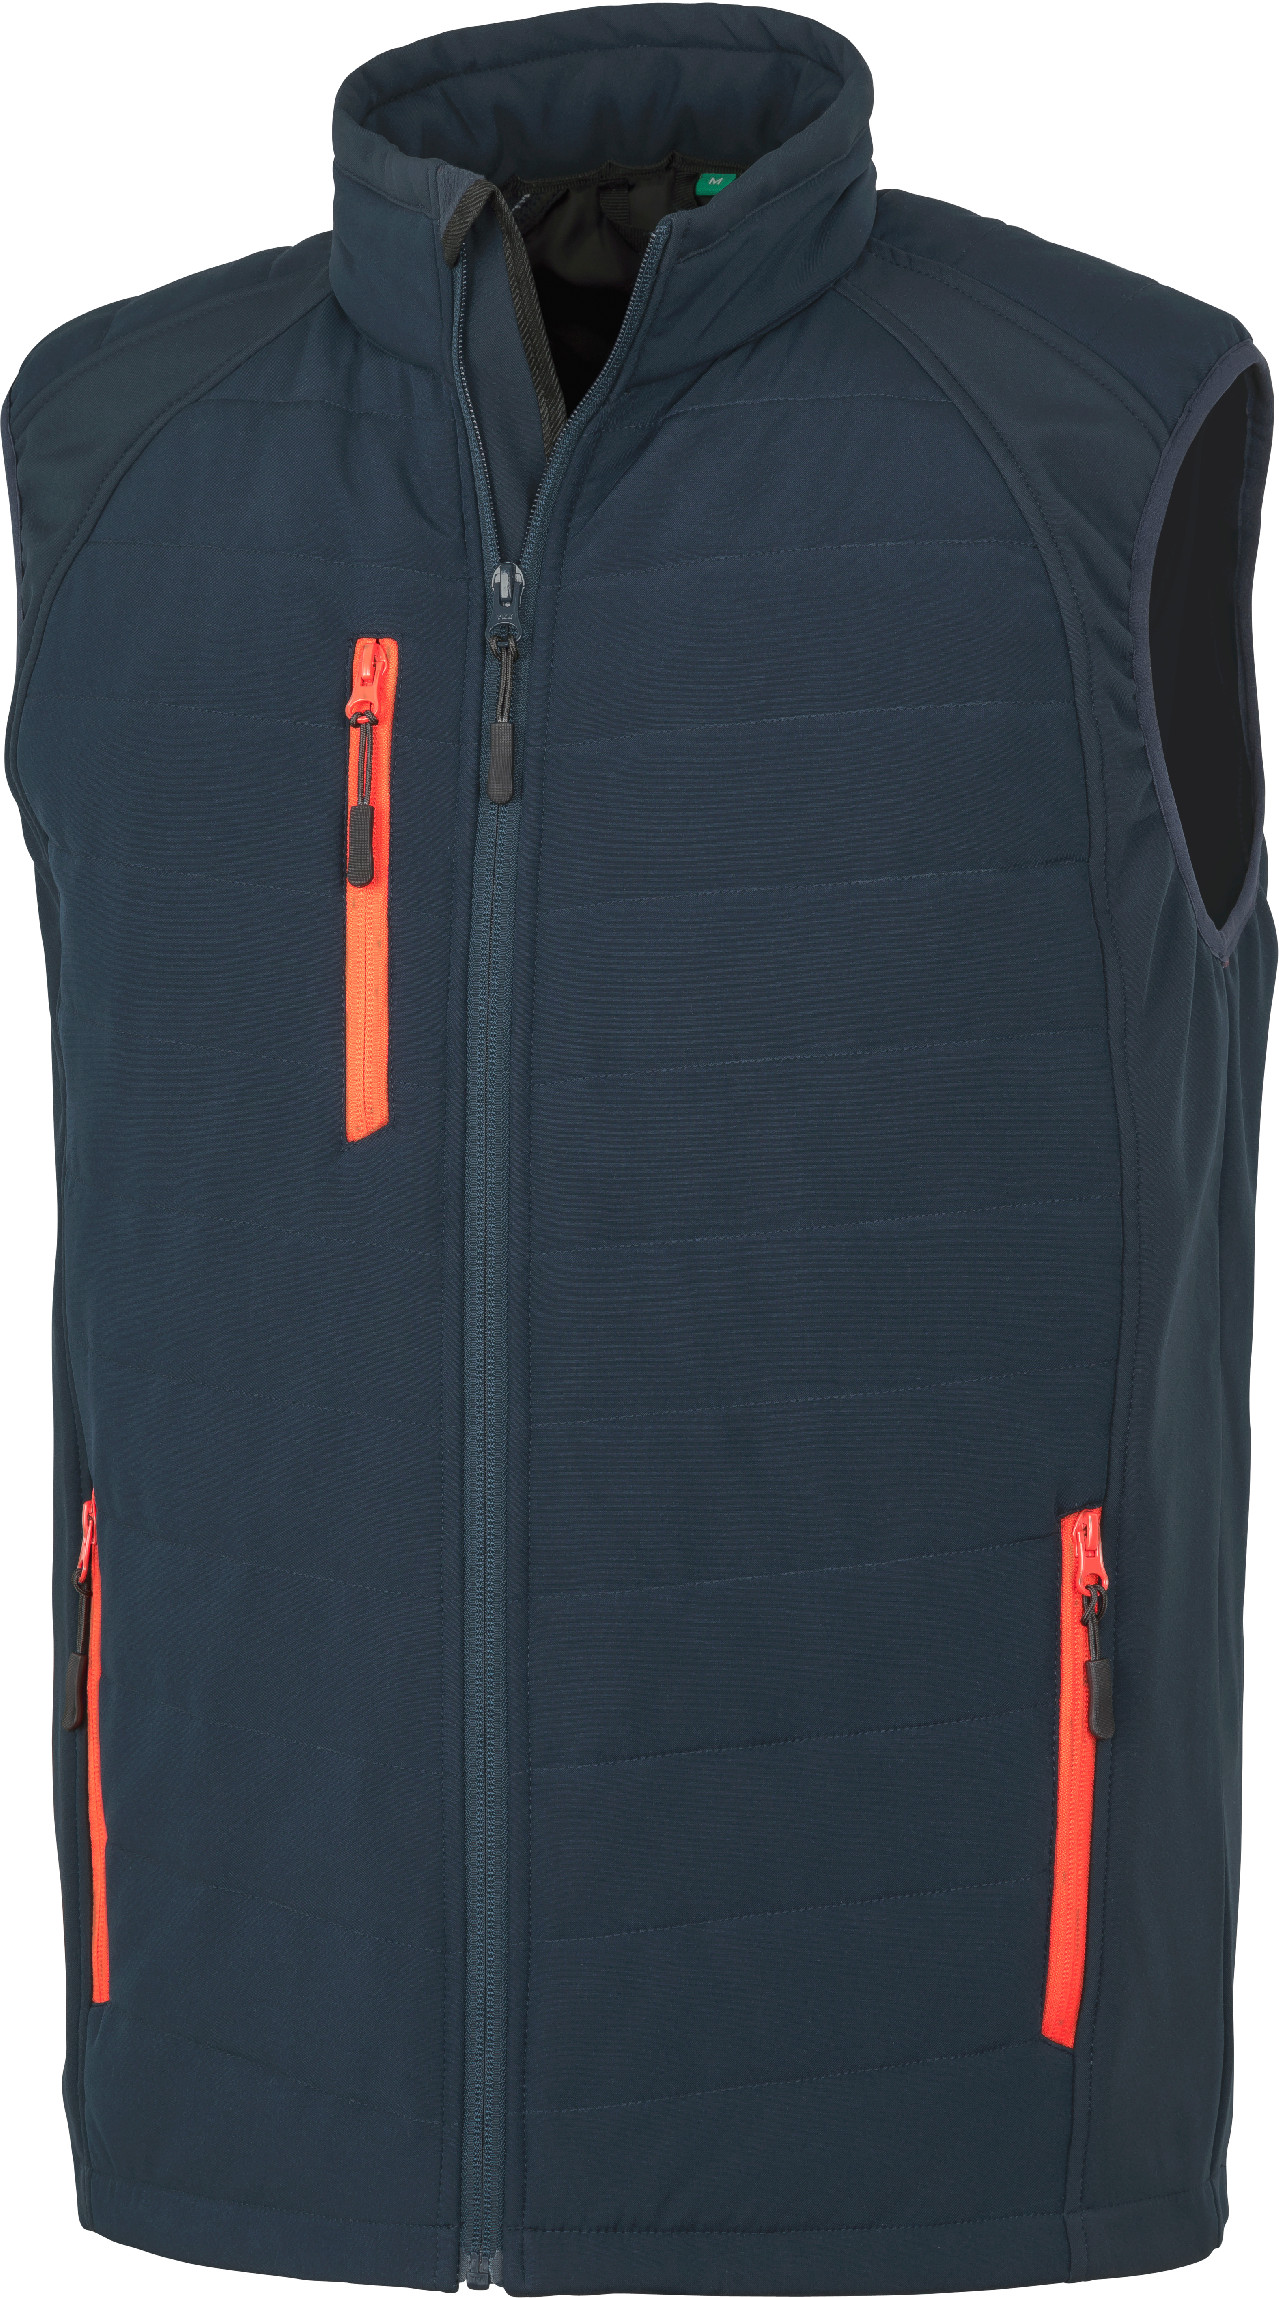 Polstrovaná softshell vesta Compass R238X Barva: námořní modrá-červená, Velikost: XL